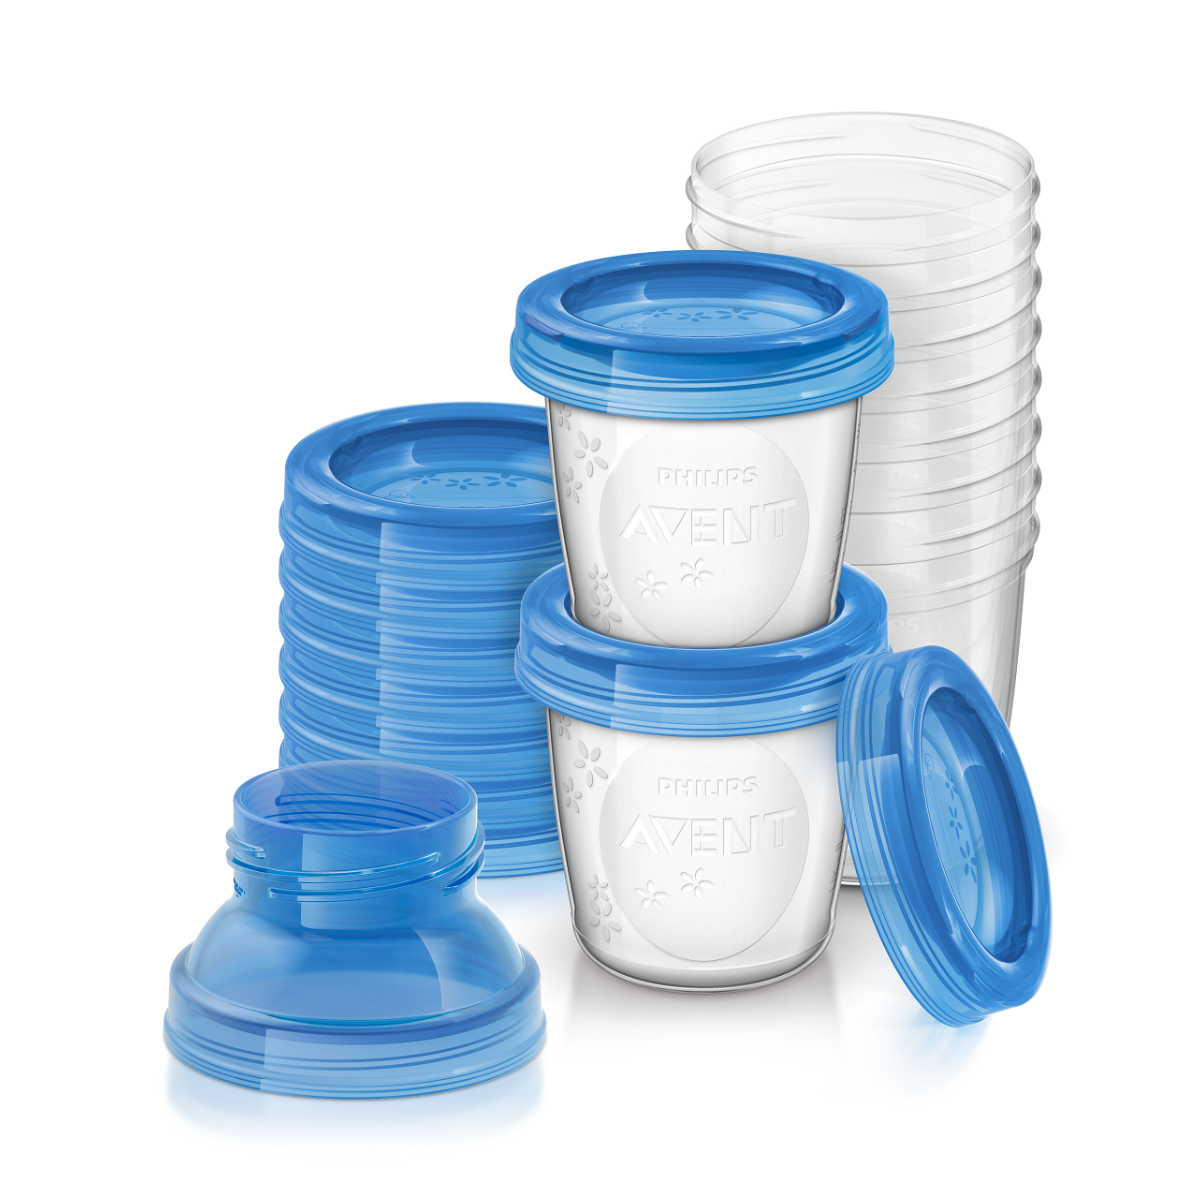 Avent Milk Storage Cups 180ml -10 Pack